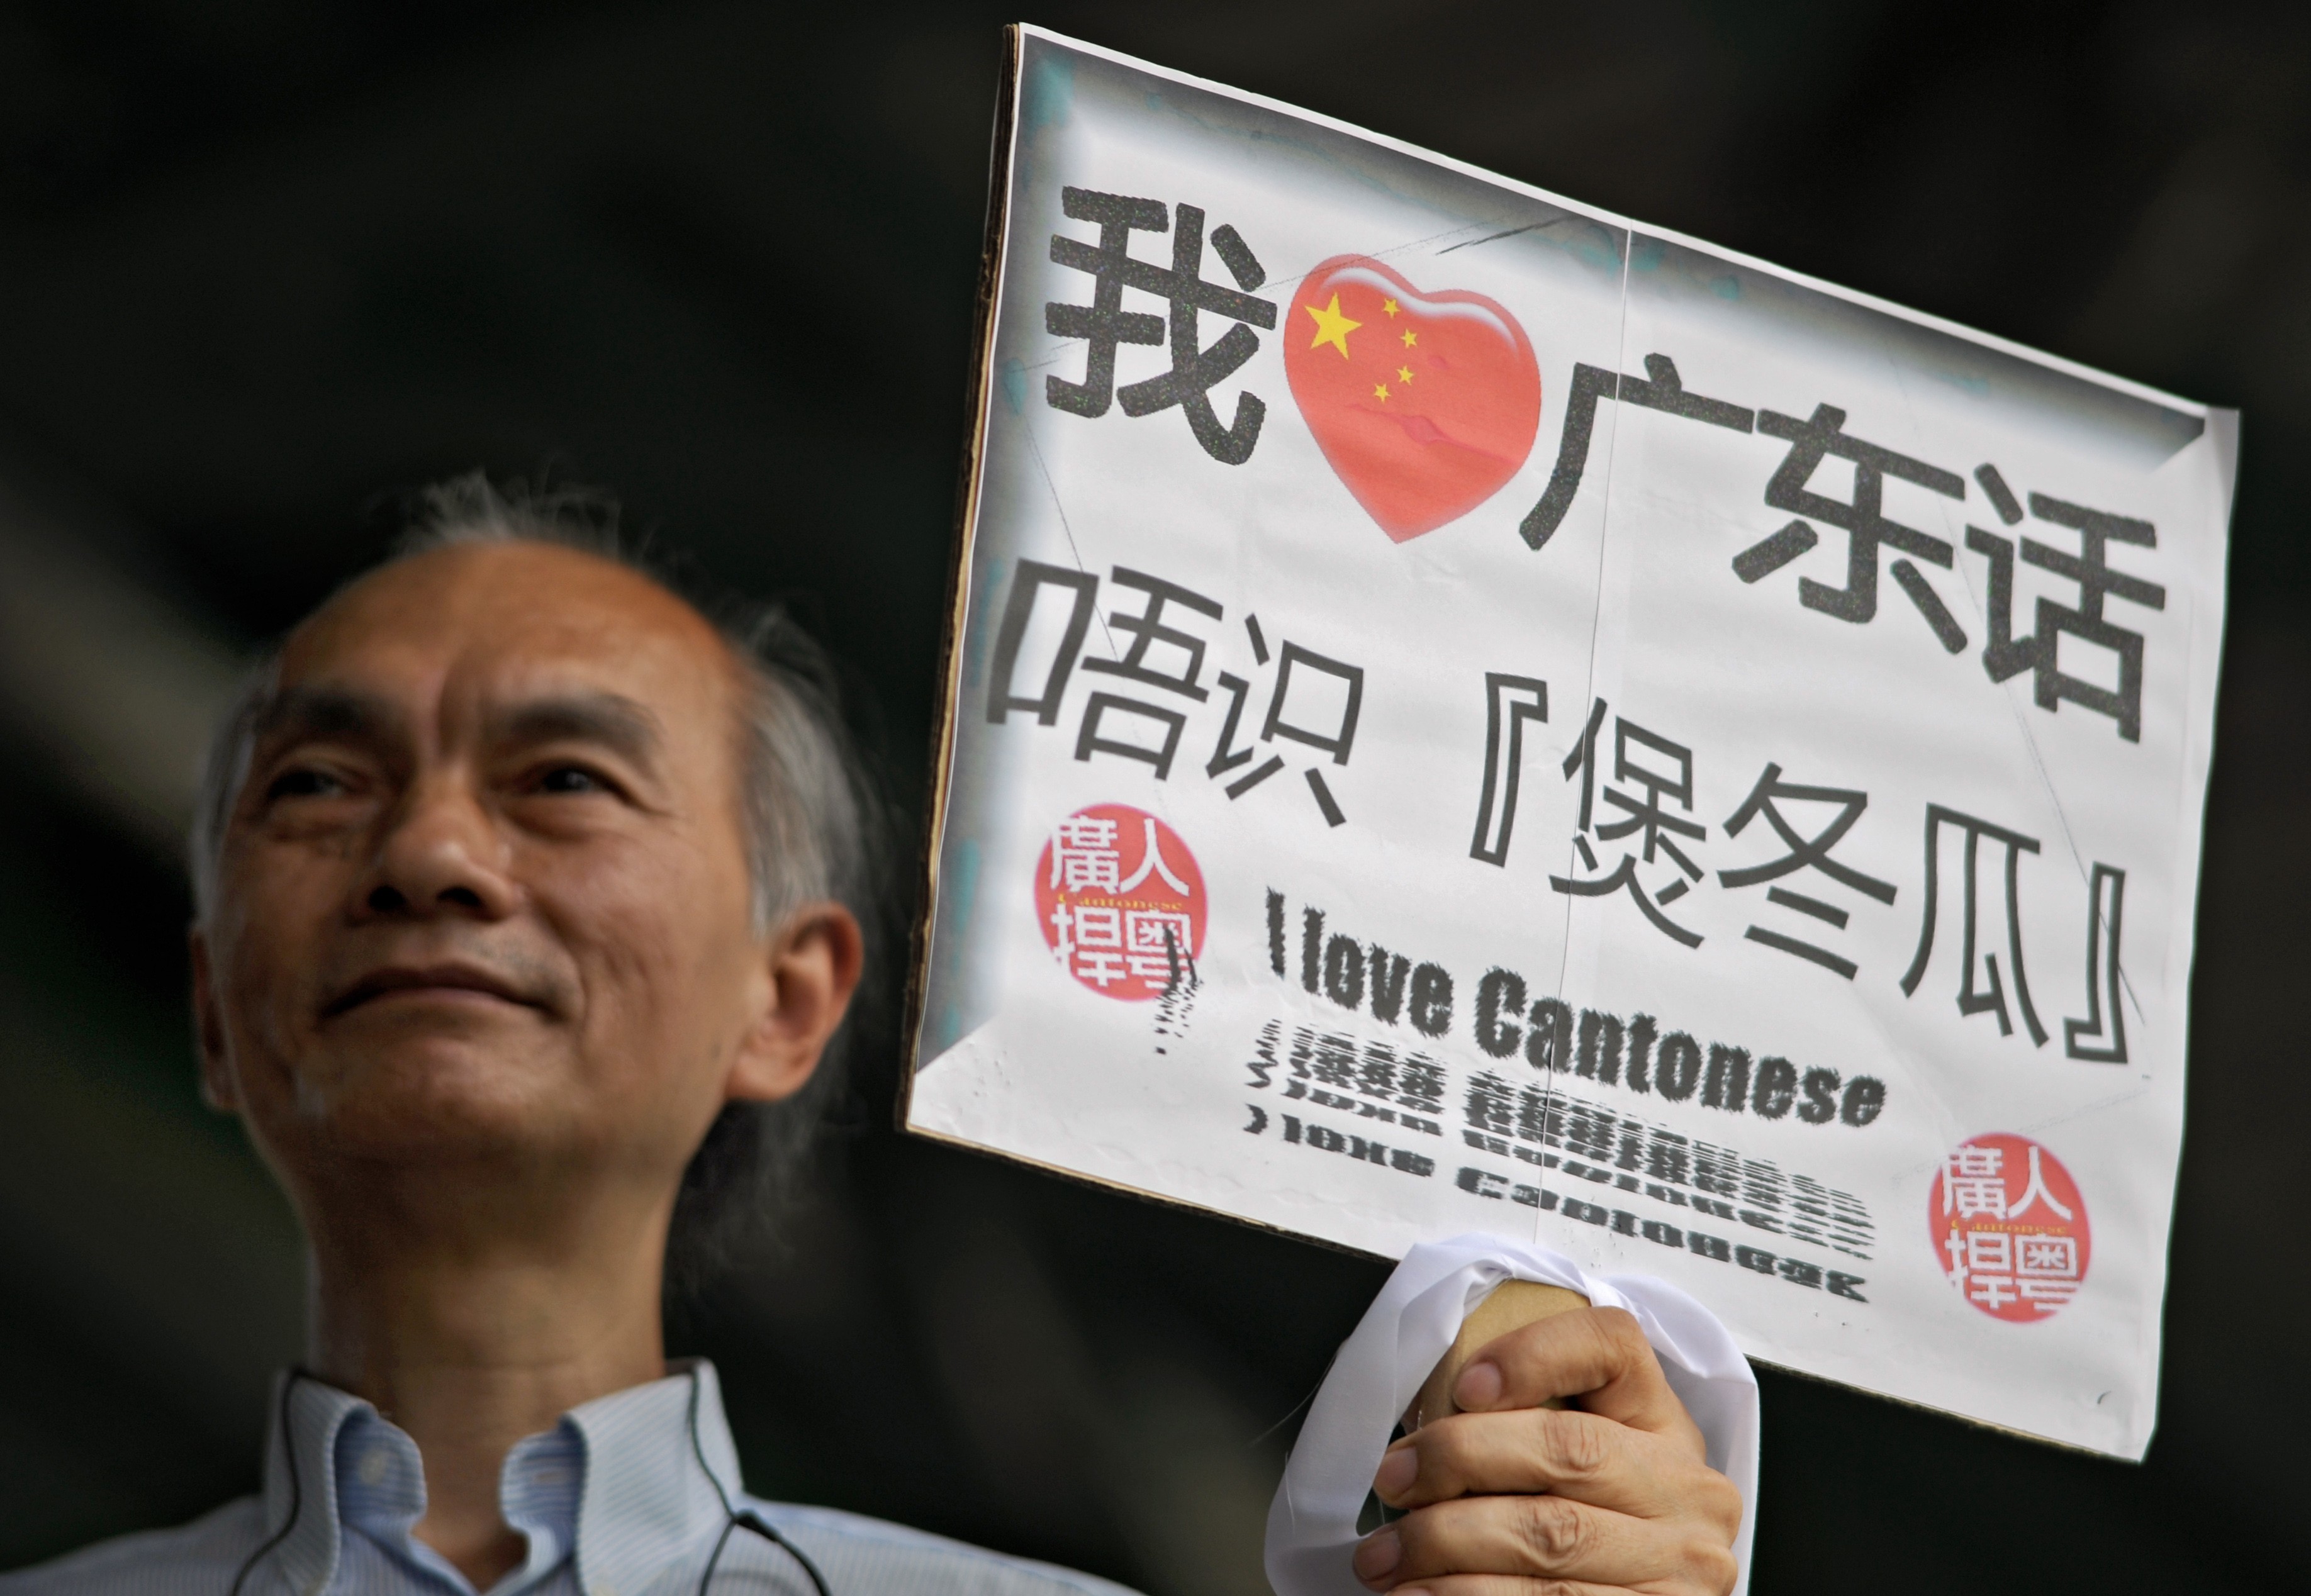 A man declares his love for Cantonese, and disdain for Mandarin, on a placard. Photo: AFP